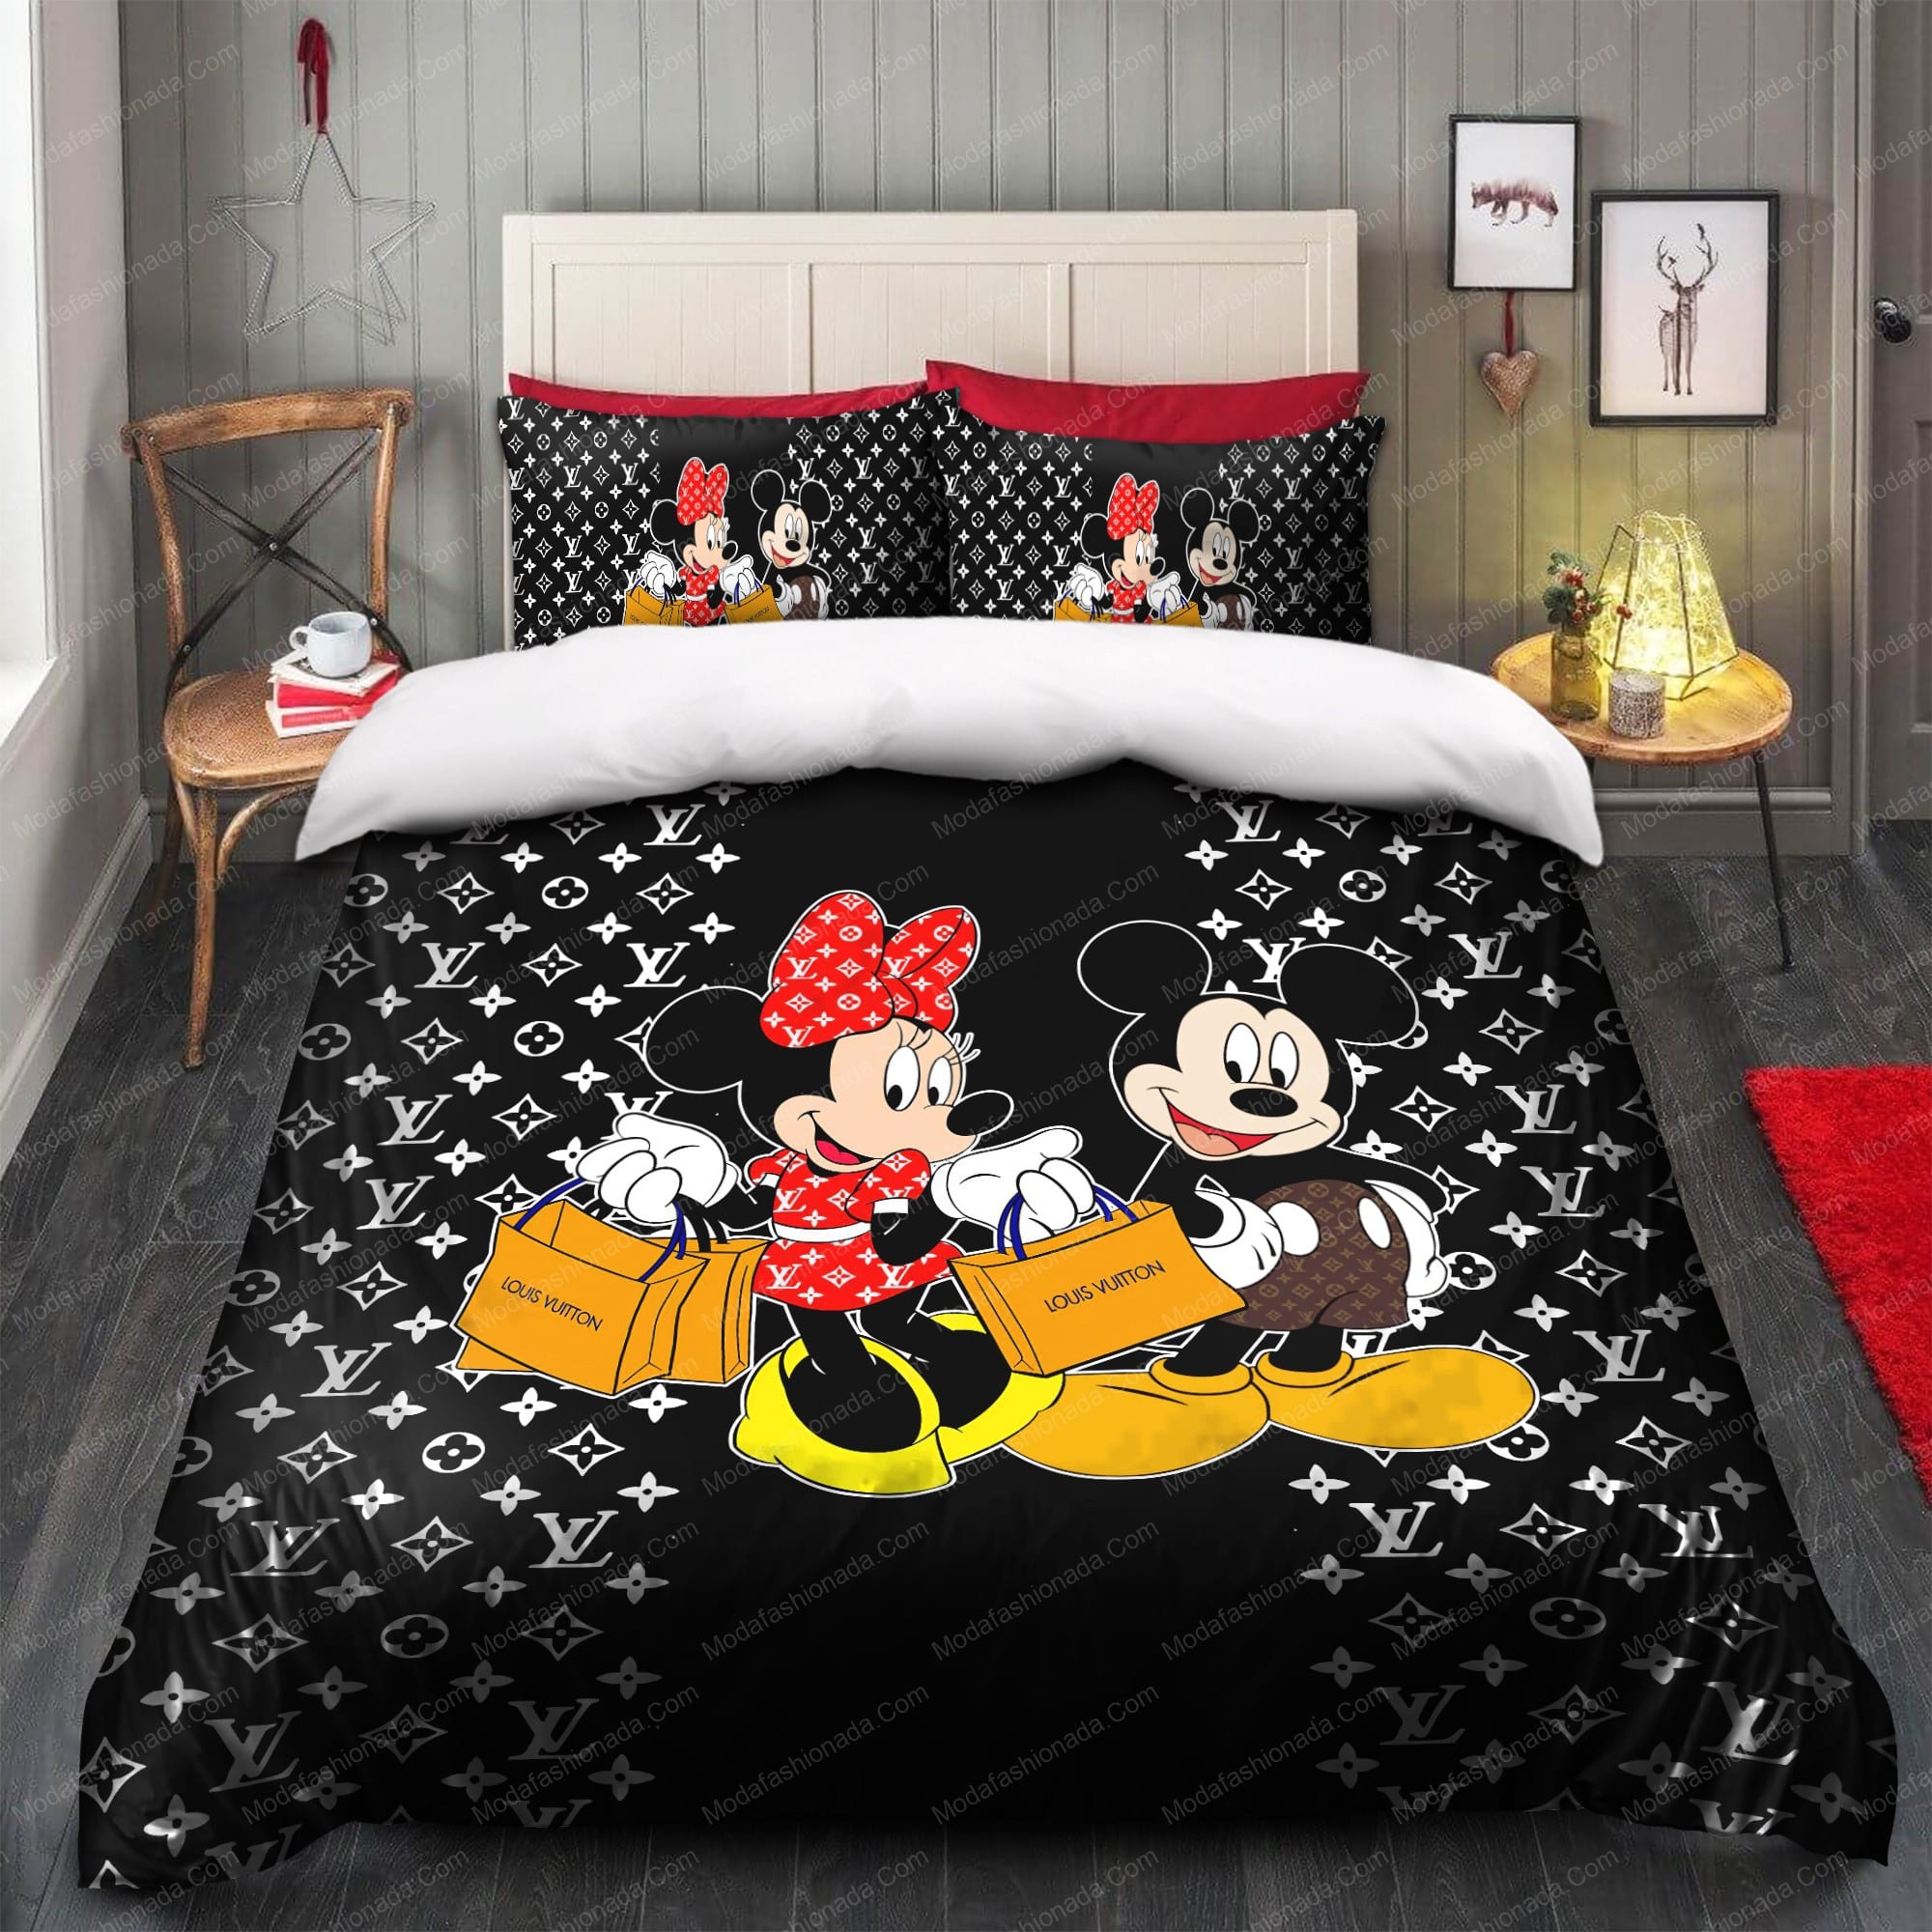 Buy Louis Vuitton Mickey Mouse Bedding Sets Bed Sets, Bedroom Sets,  Comforter Sets, Duvet Cover, Bedspread